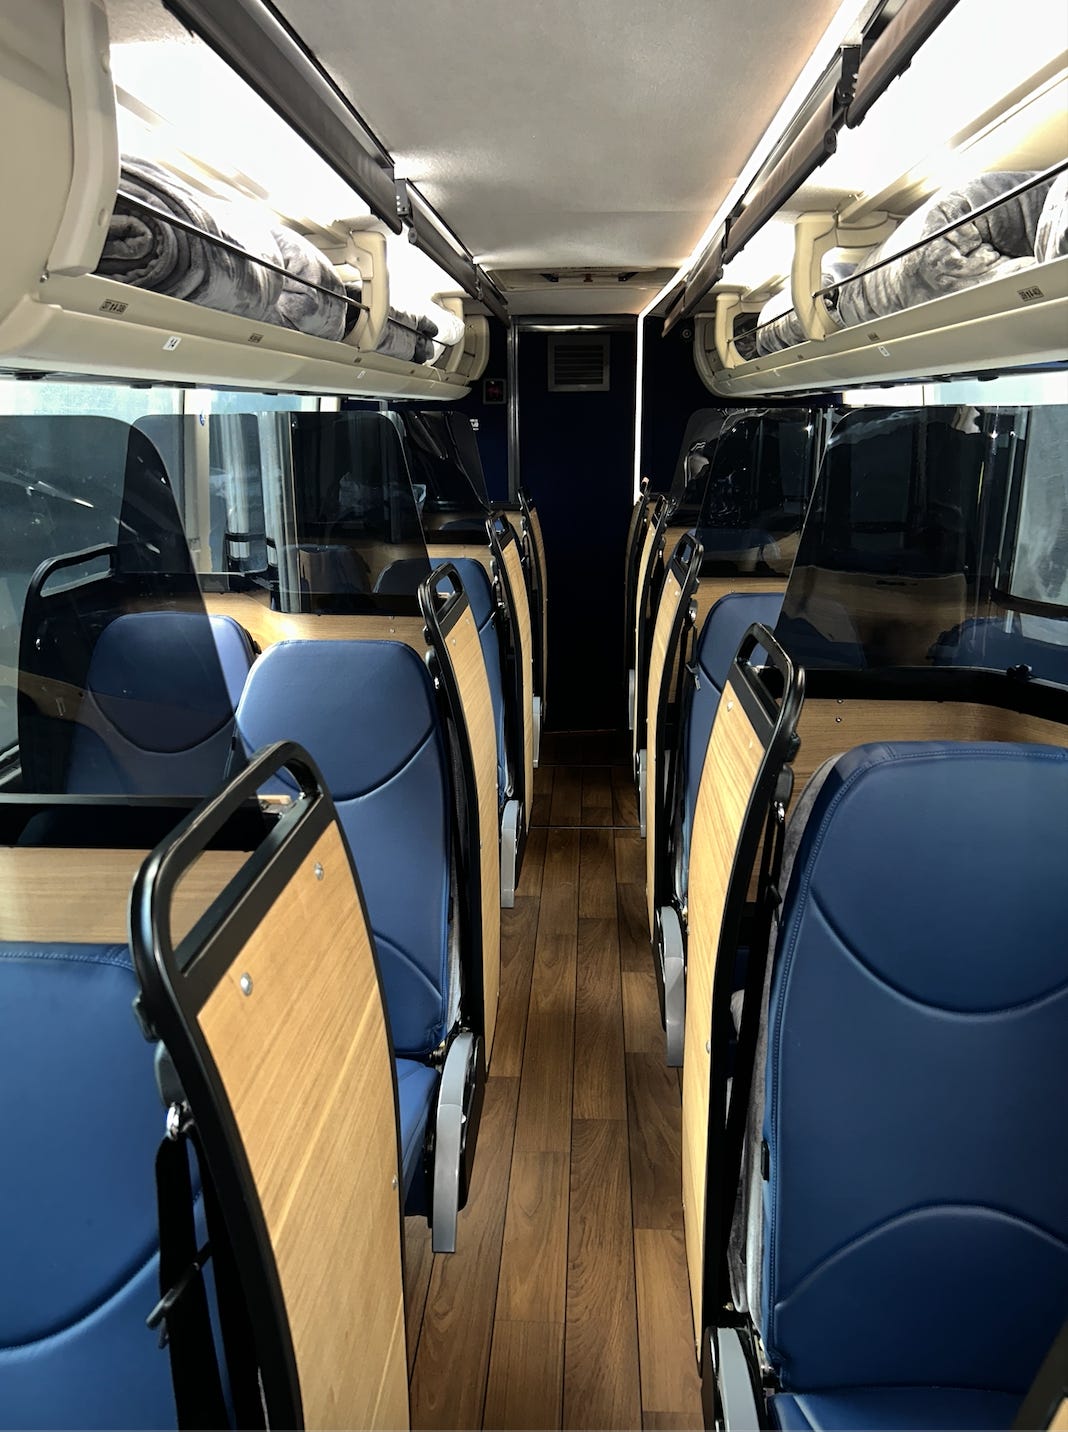 blaue sitze in cubbies im napaway-bus